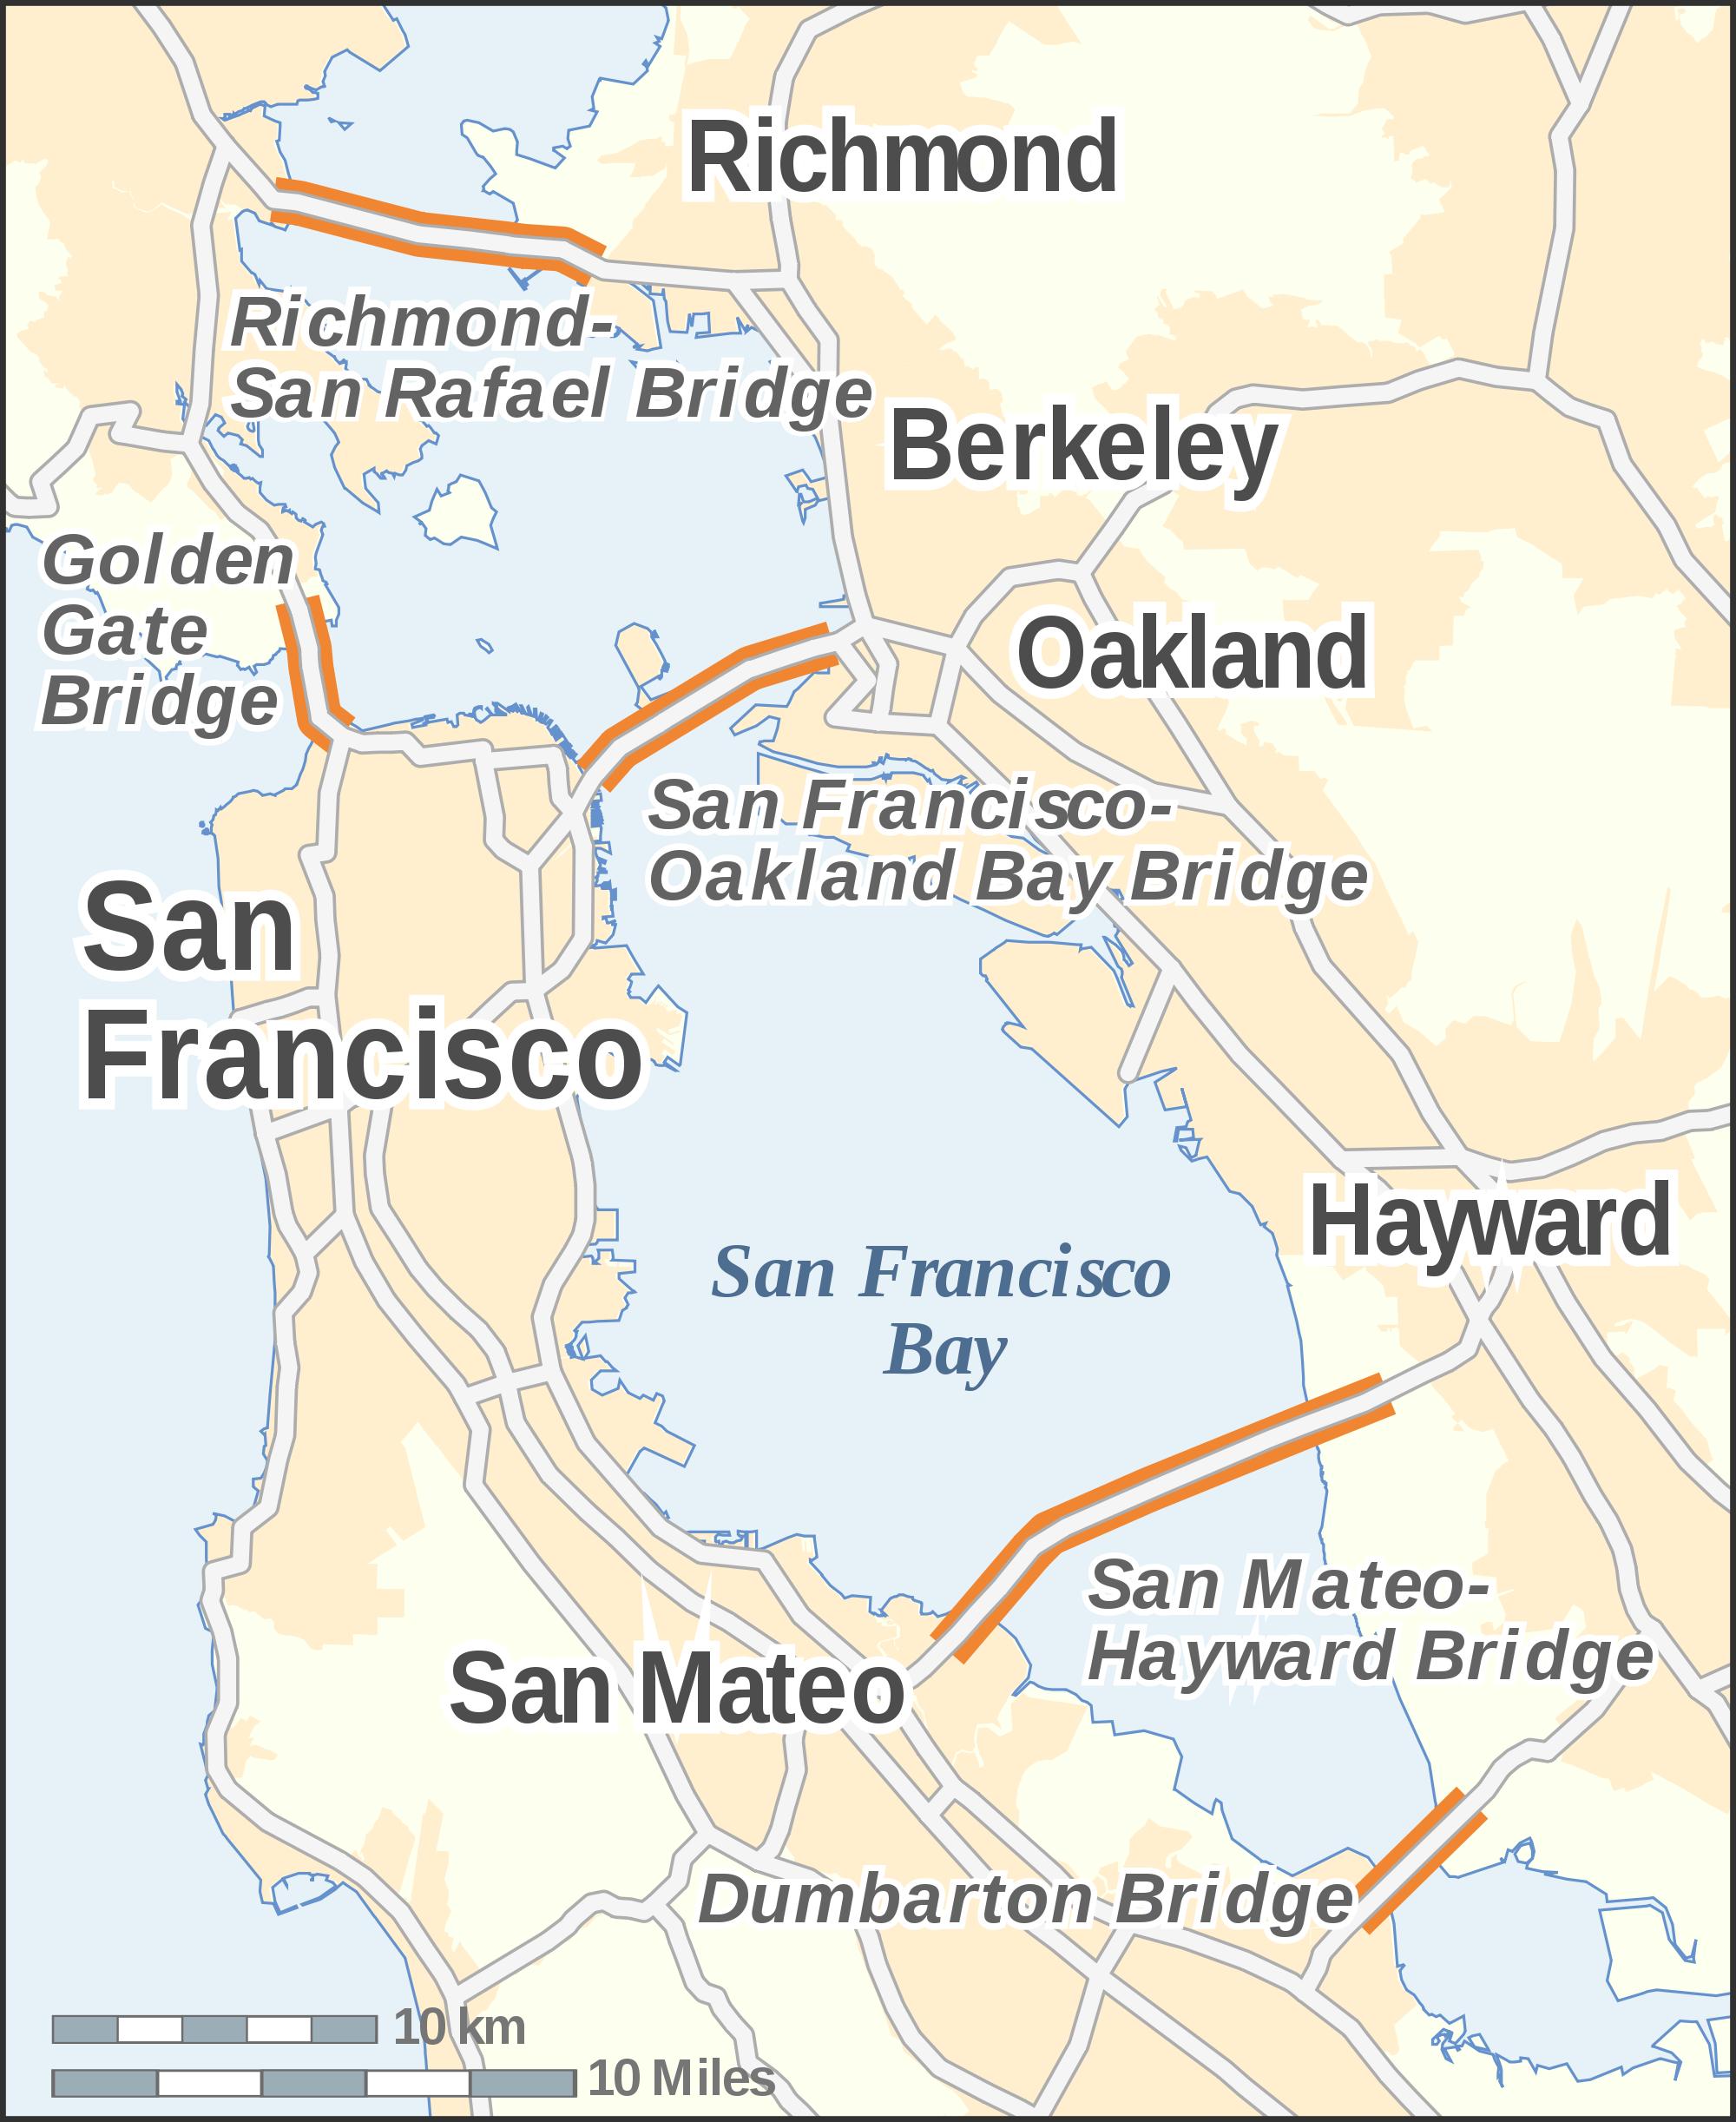 Bay Area Bridges Map 